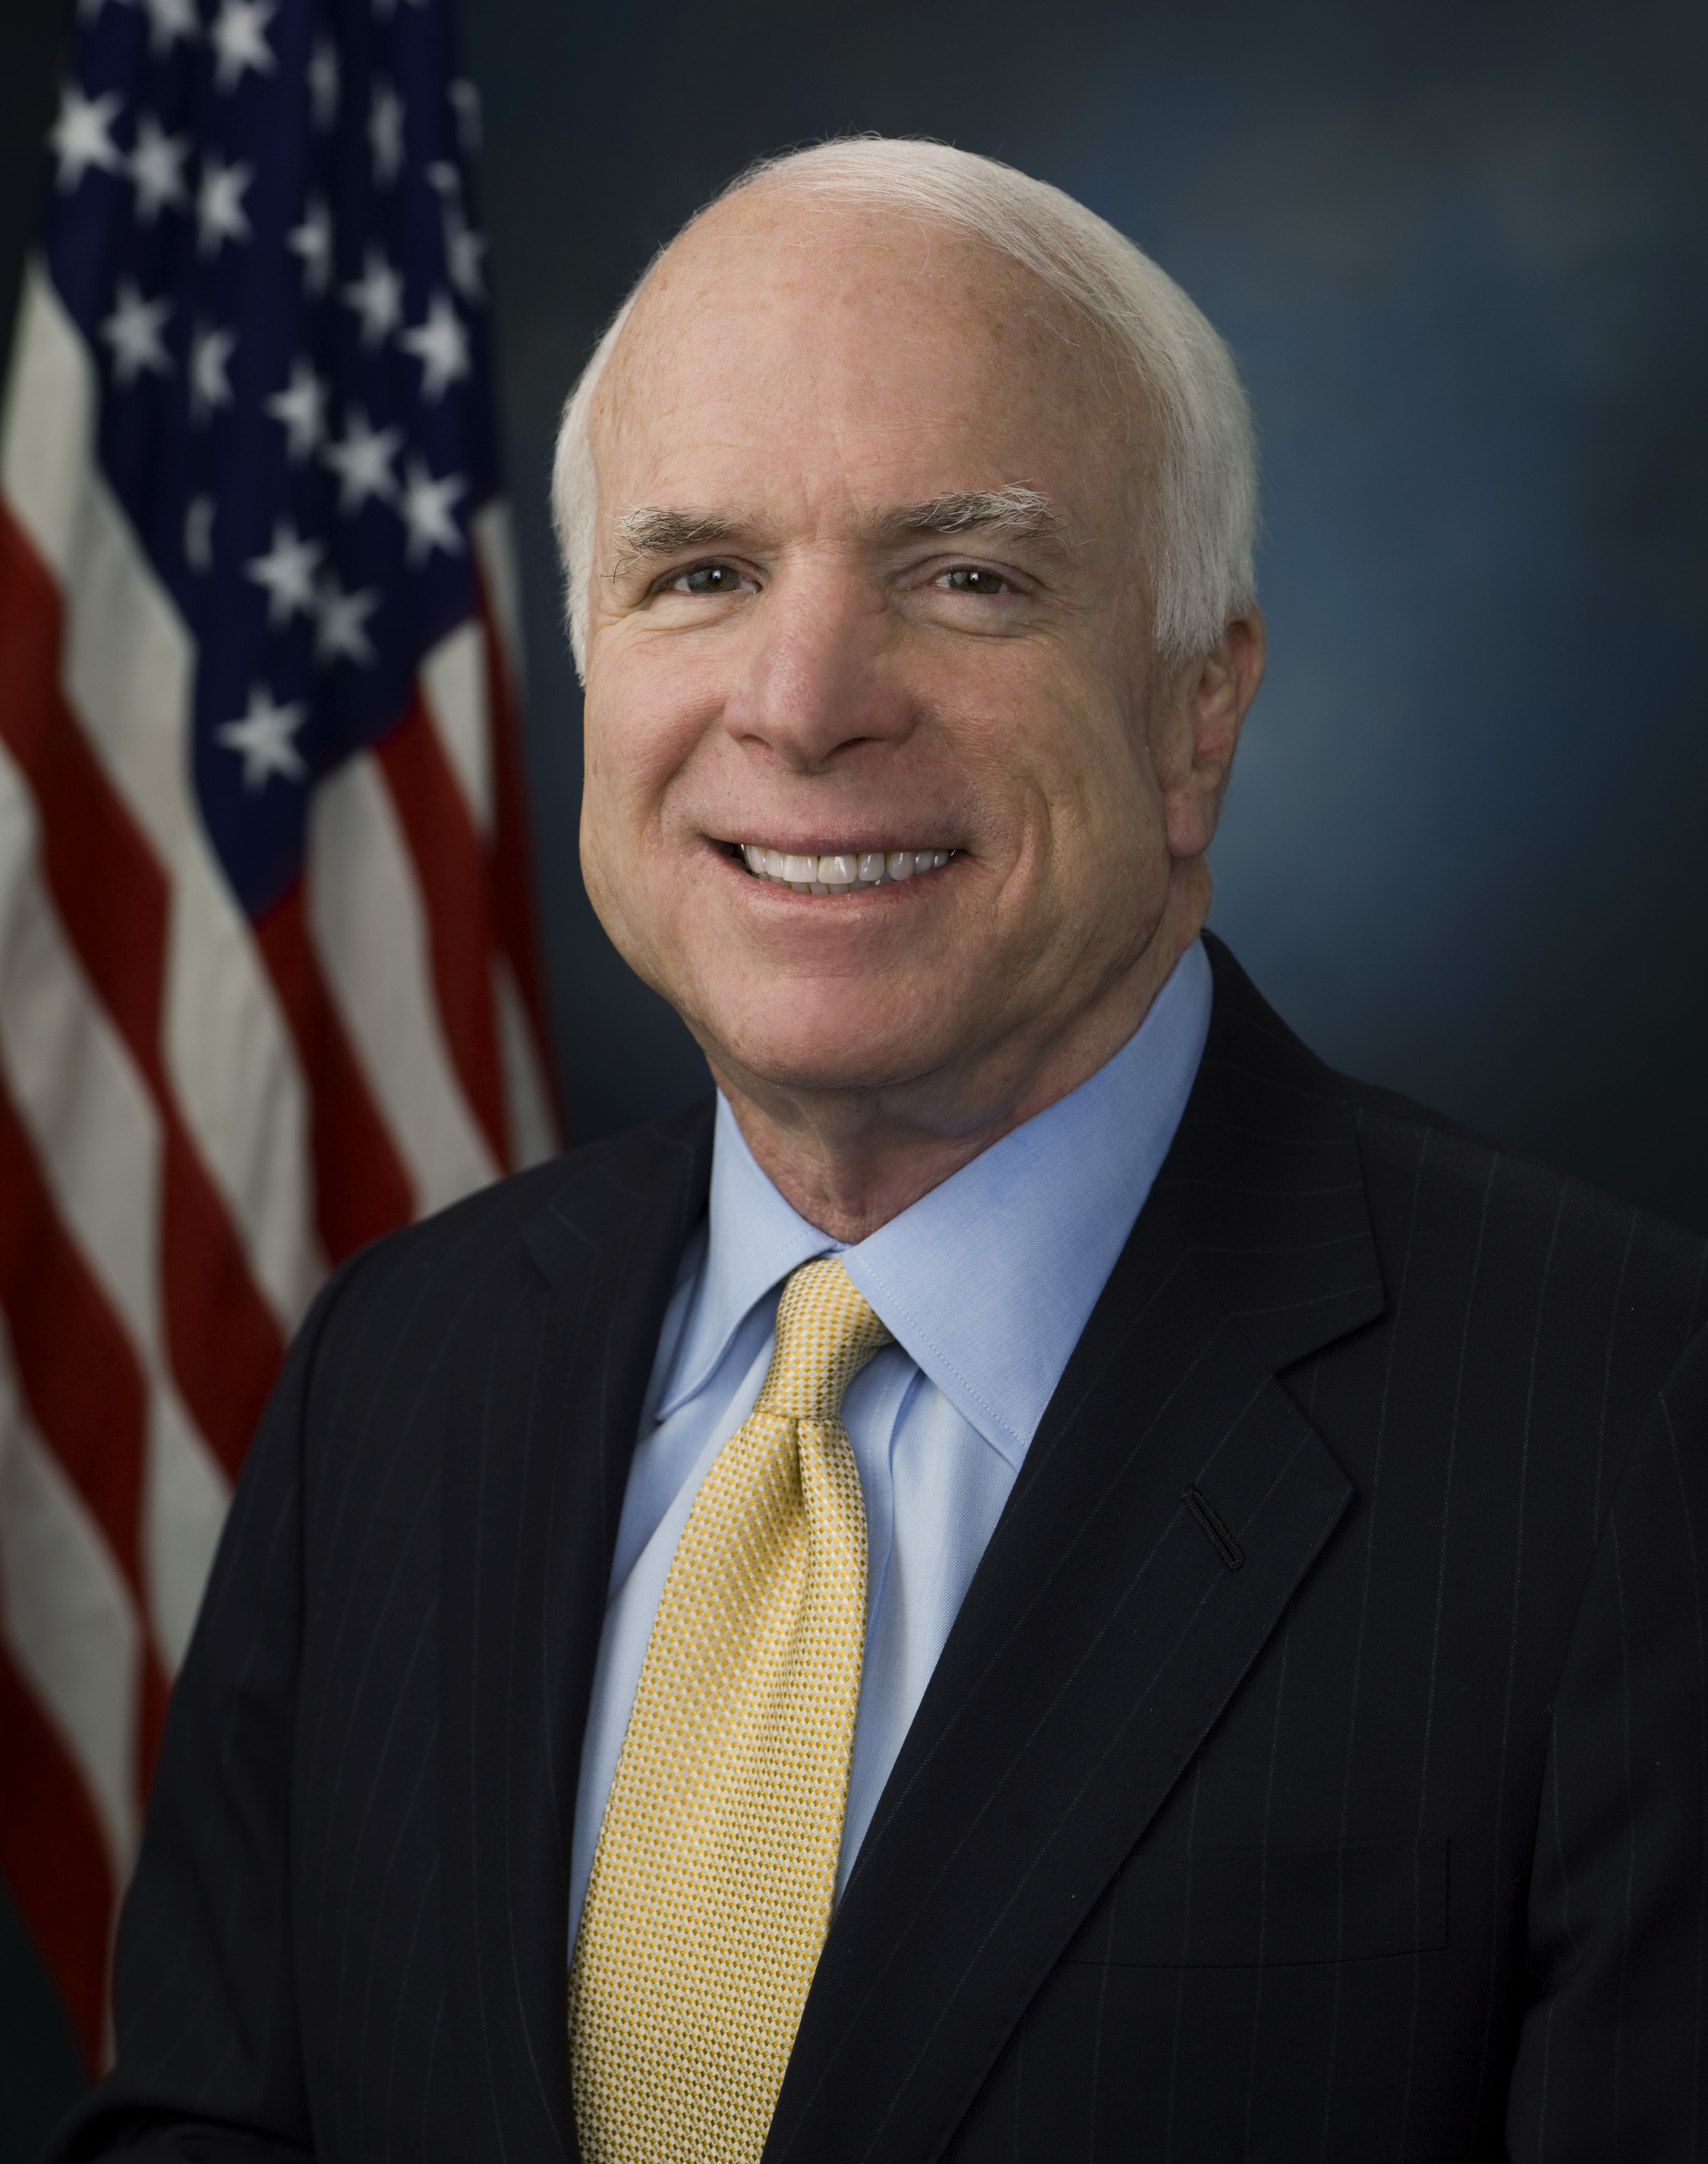 Sen. John McCain died Aug. 25, 2018, at the age of 81. Photo by U.S. Senate photographer Frank A. Fey.